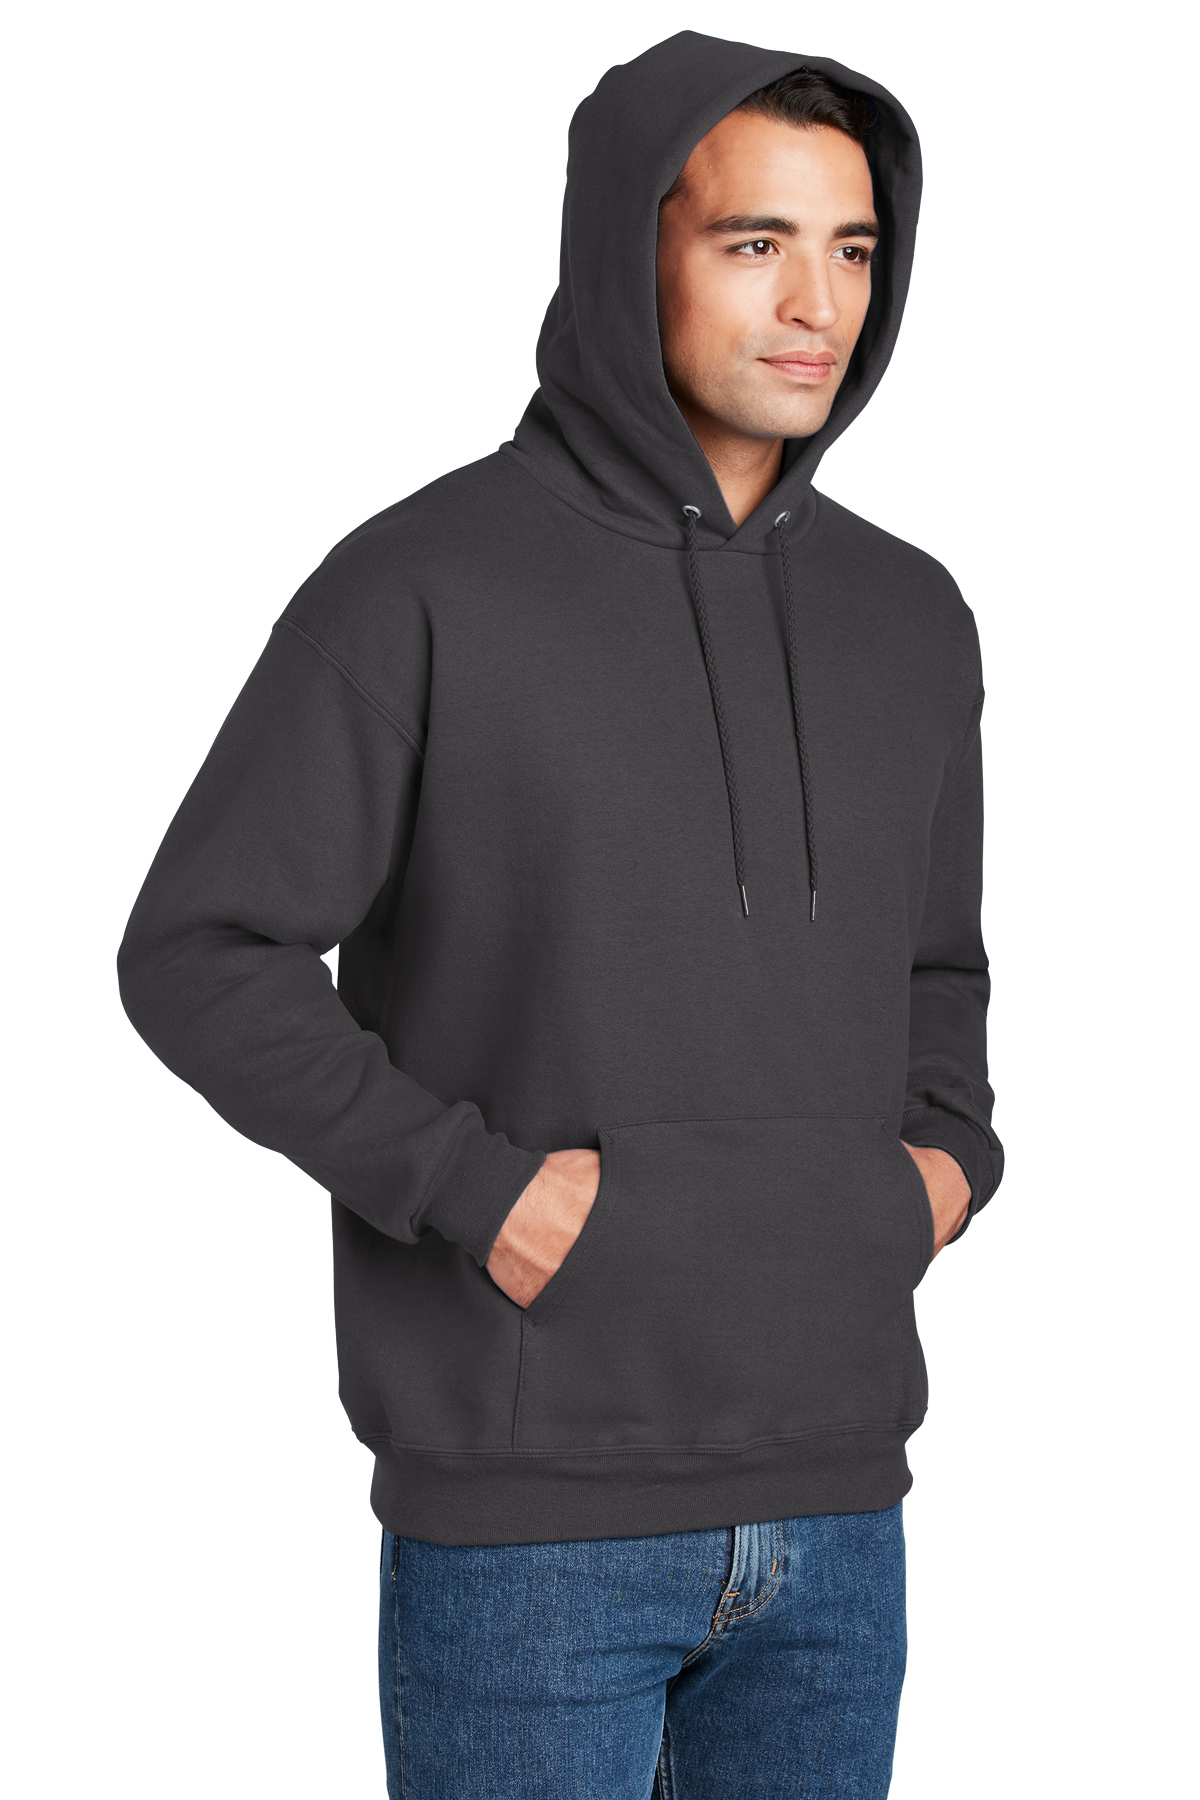 Hanes Ultimate Cotton - Pullover Hooded Sweatshirt | Product | SanMar